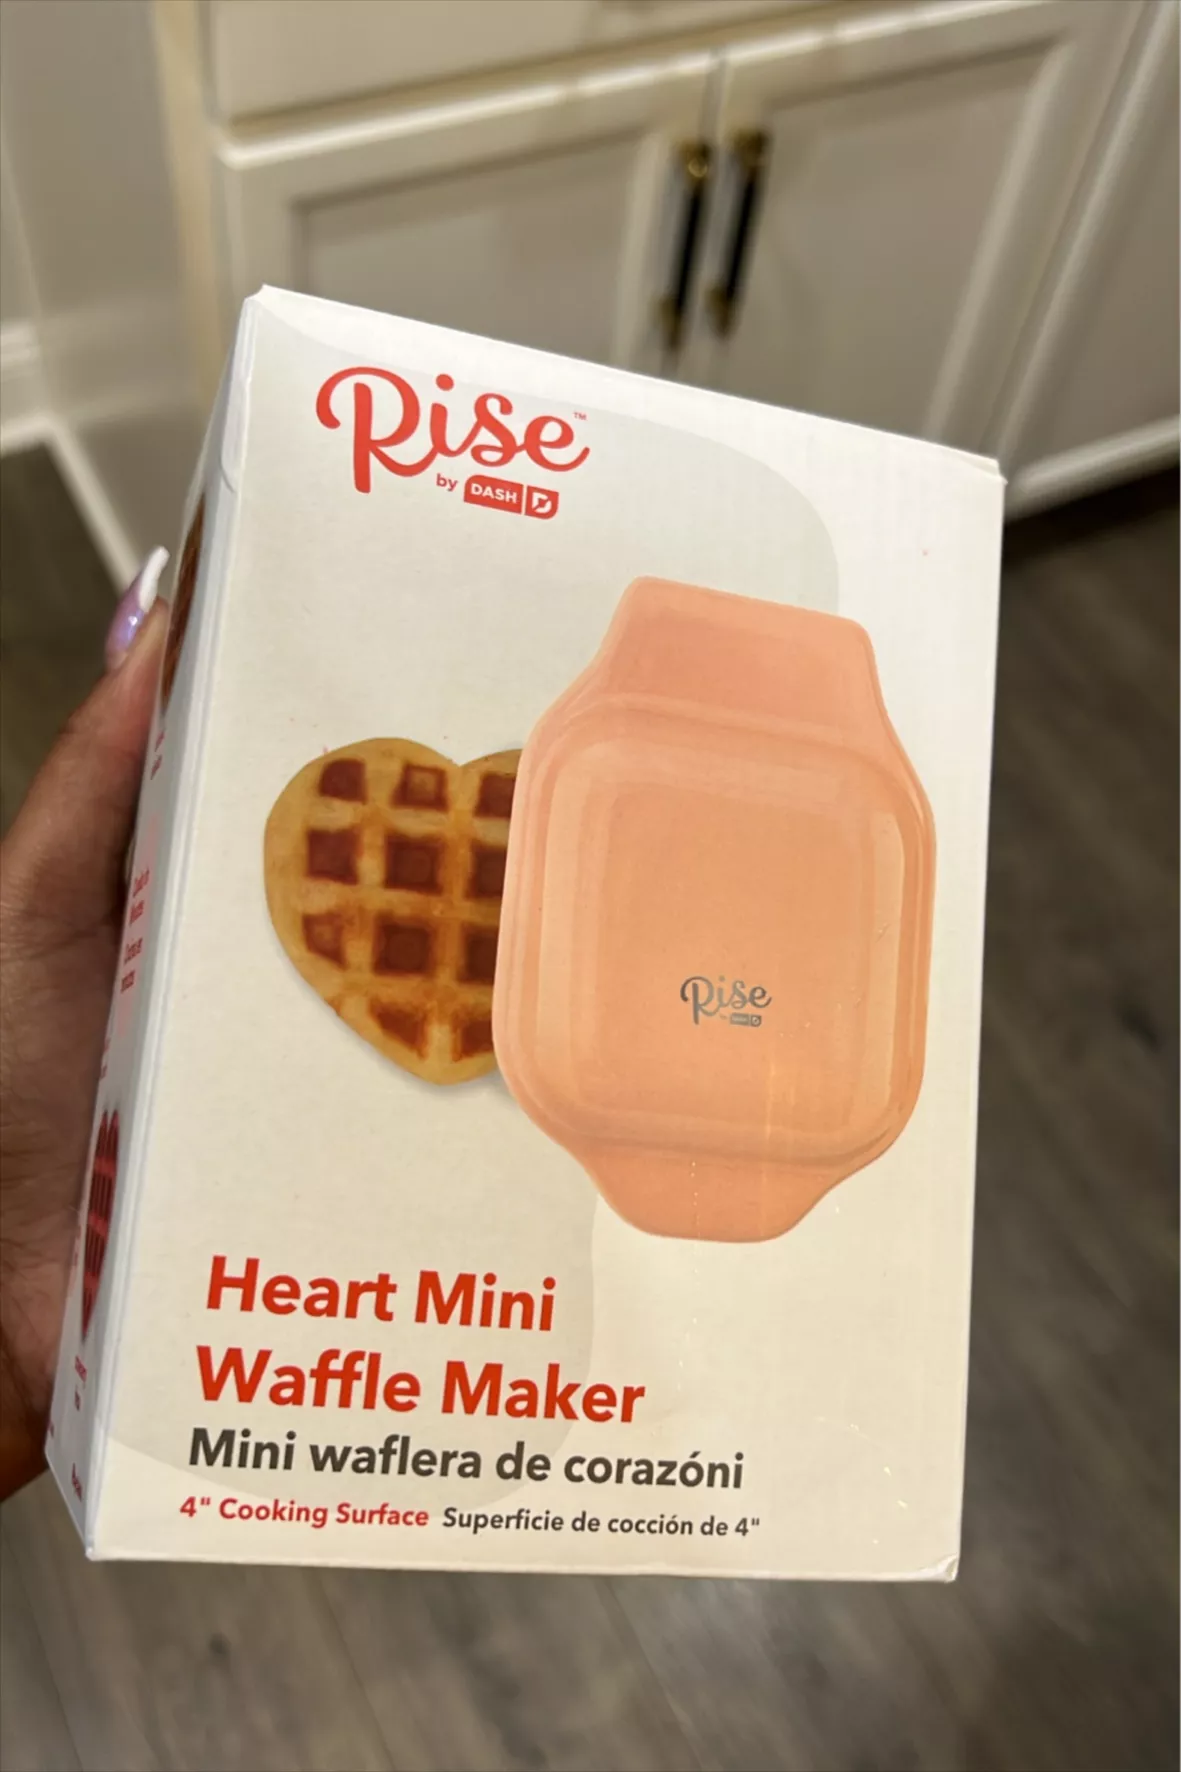 Nostalgia My Mini Heart Waffle Maker - Walmart Finds